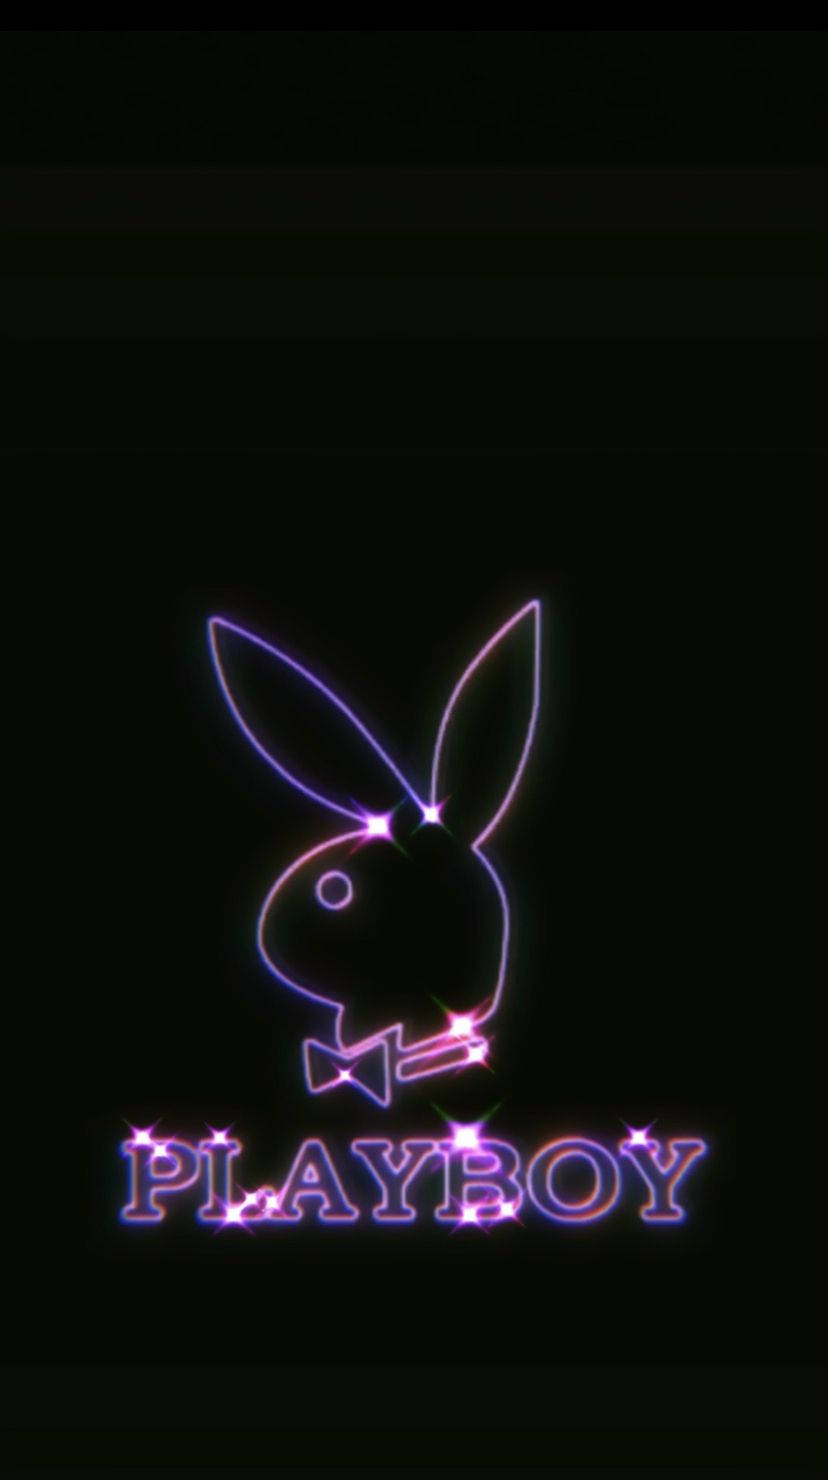 Retro Playboy Logo Background